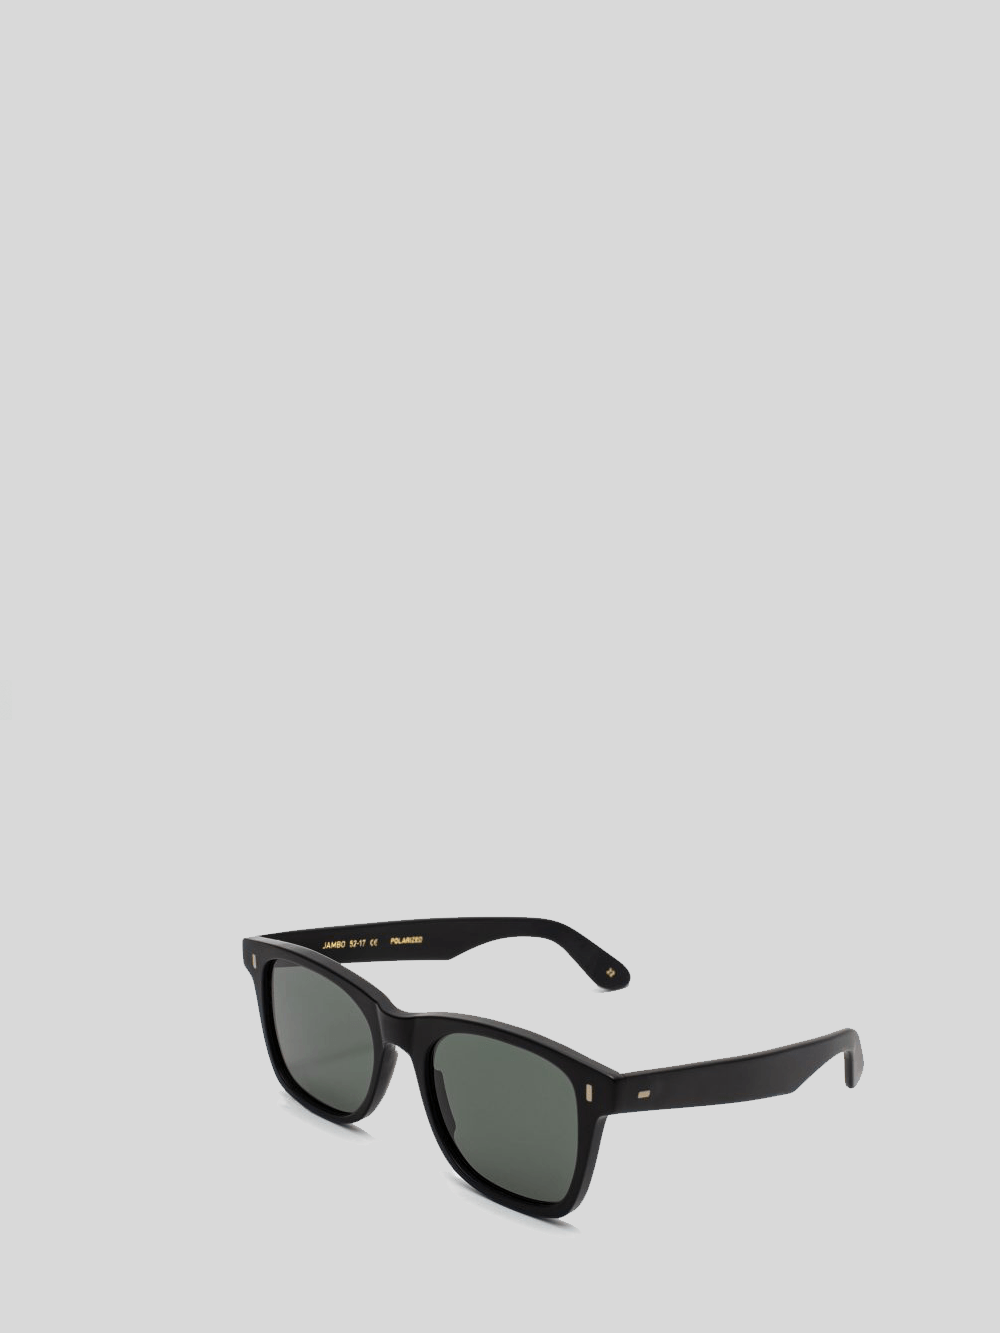 Jambo Black Matt 22 Grey Polarized 52&#39; Sunglasses L.G.R. 